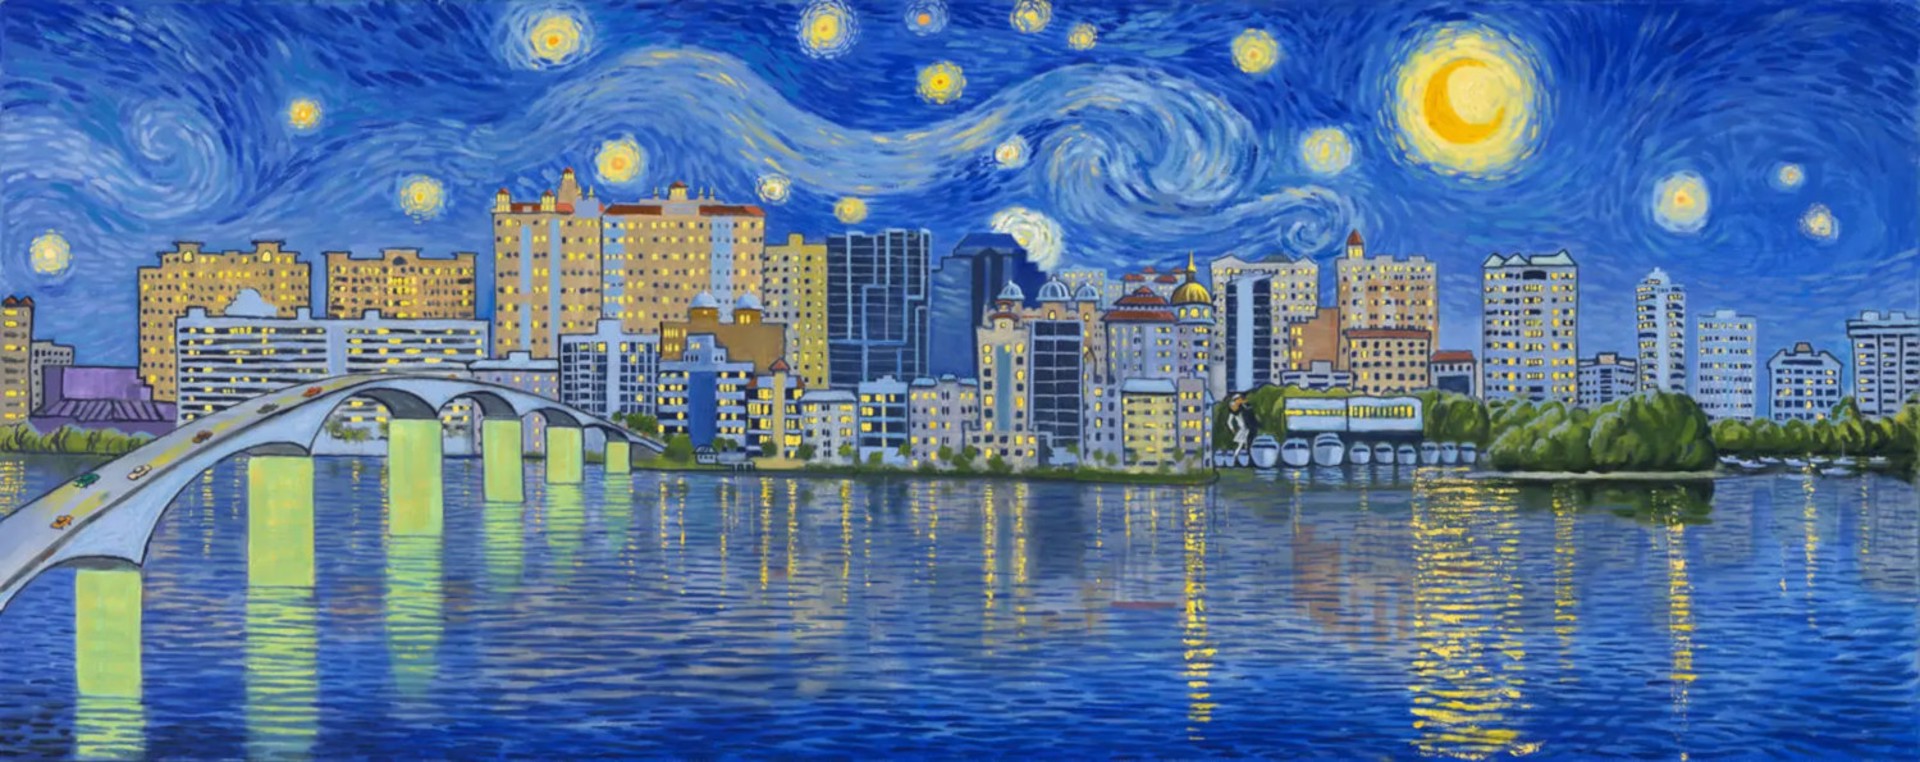 Starry Night Over Sarasota by Robert Johnson